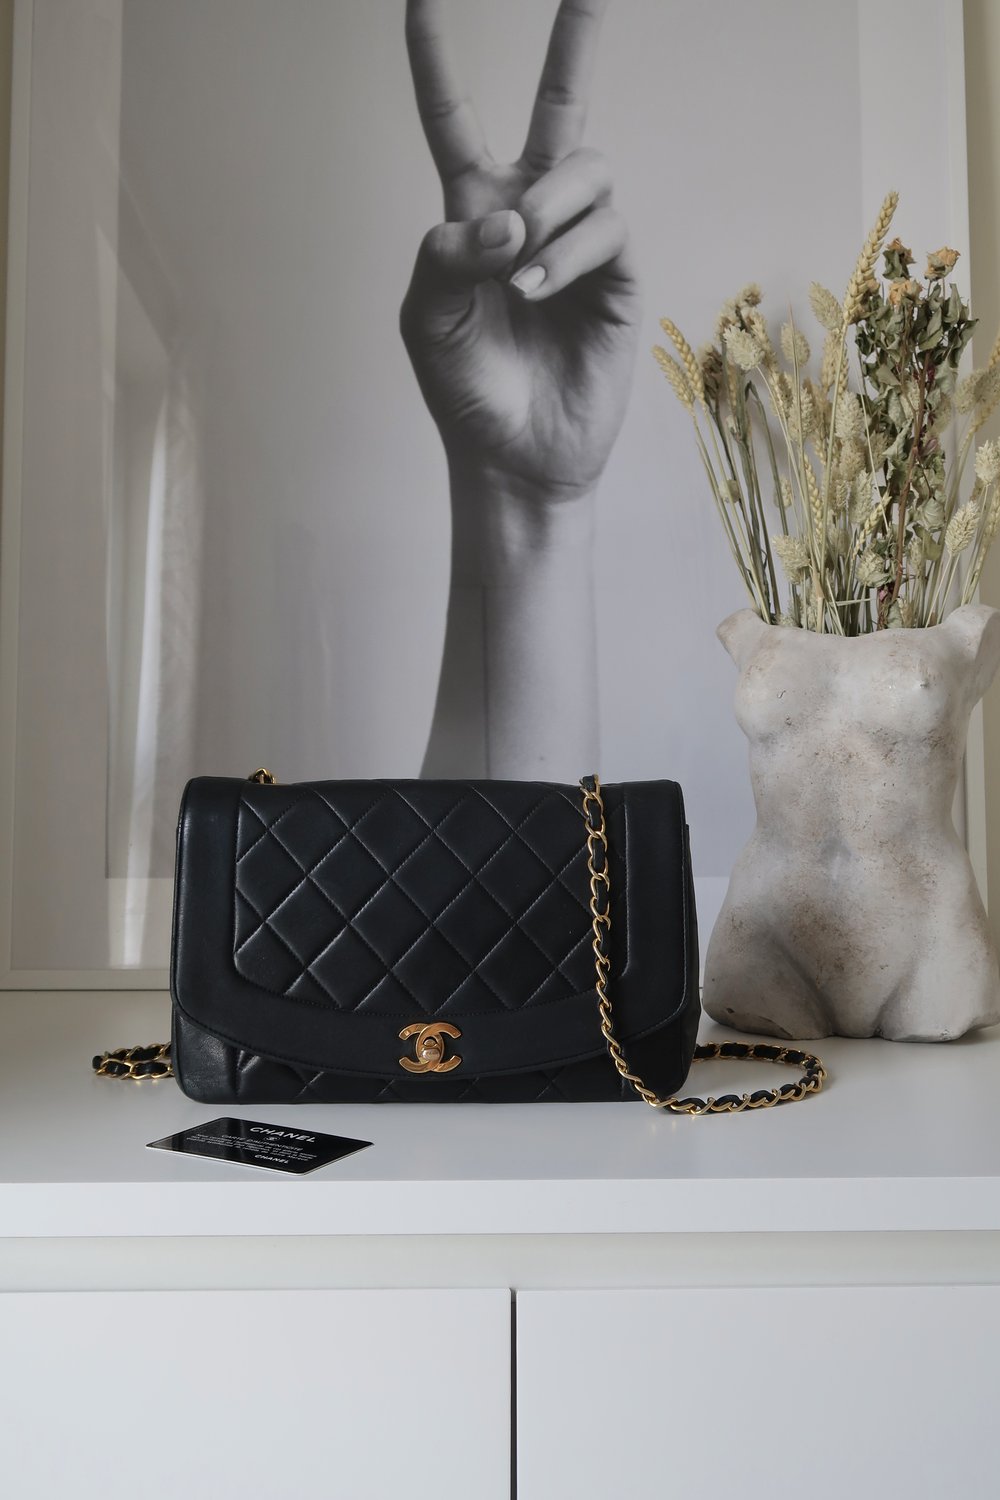 Vintage Chanel Black Quilted Diana Flap Bag - 2 series (1991